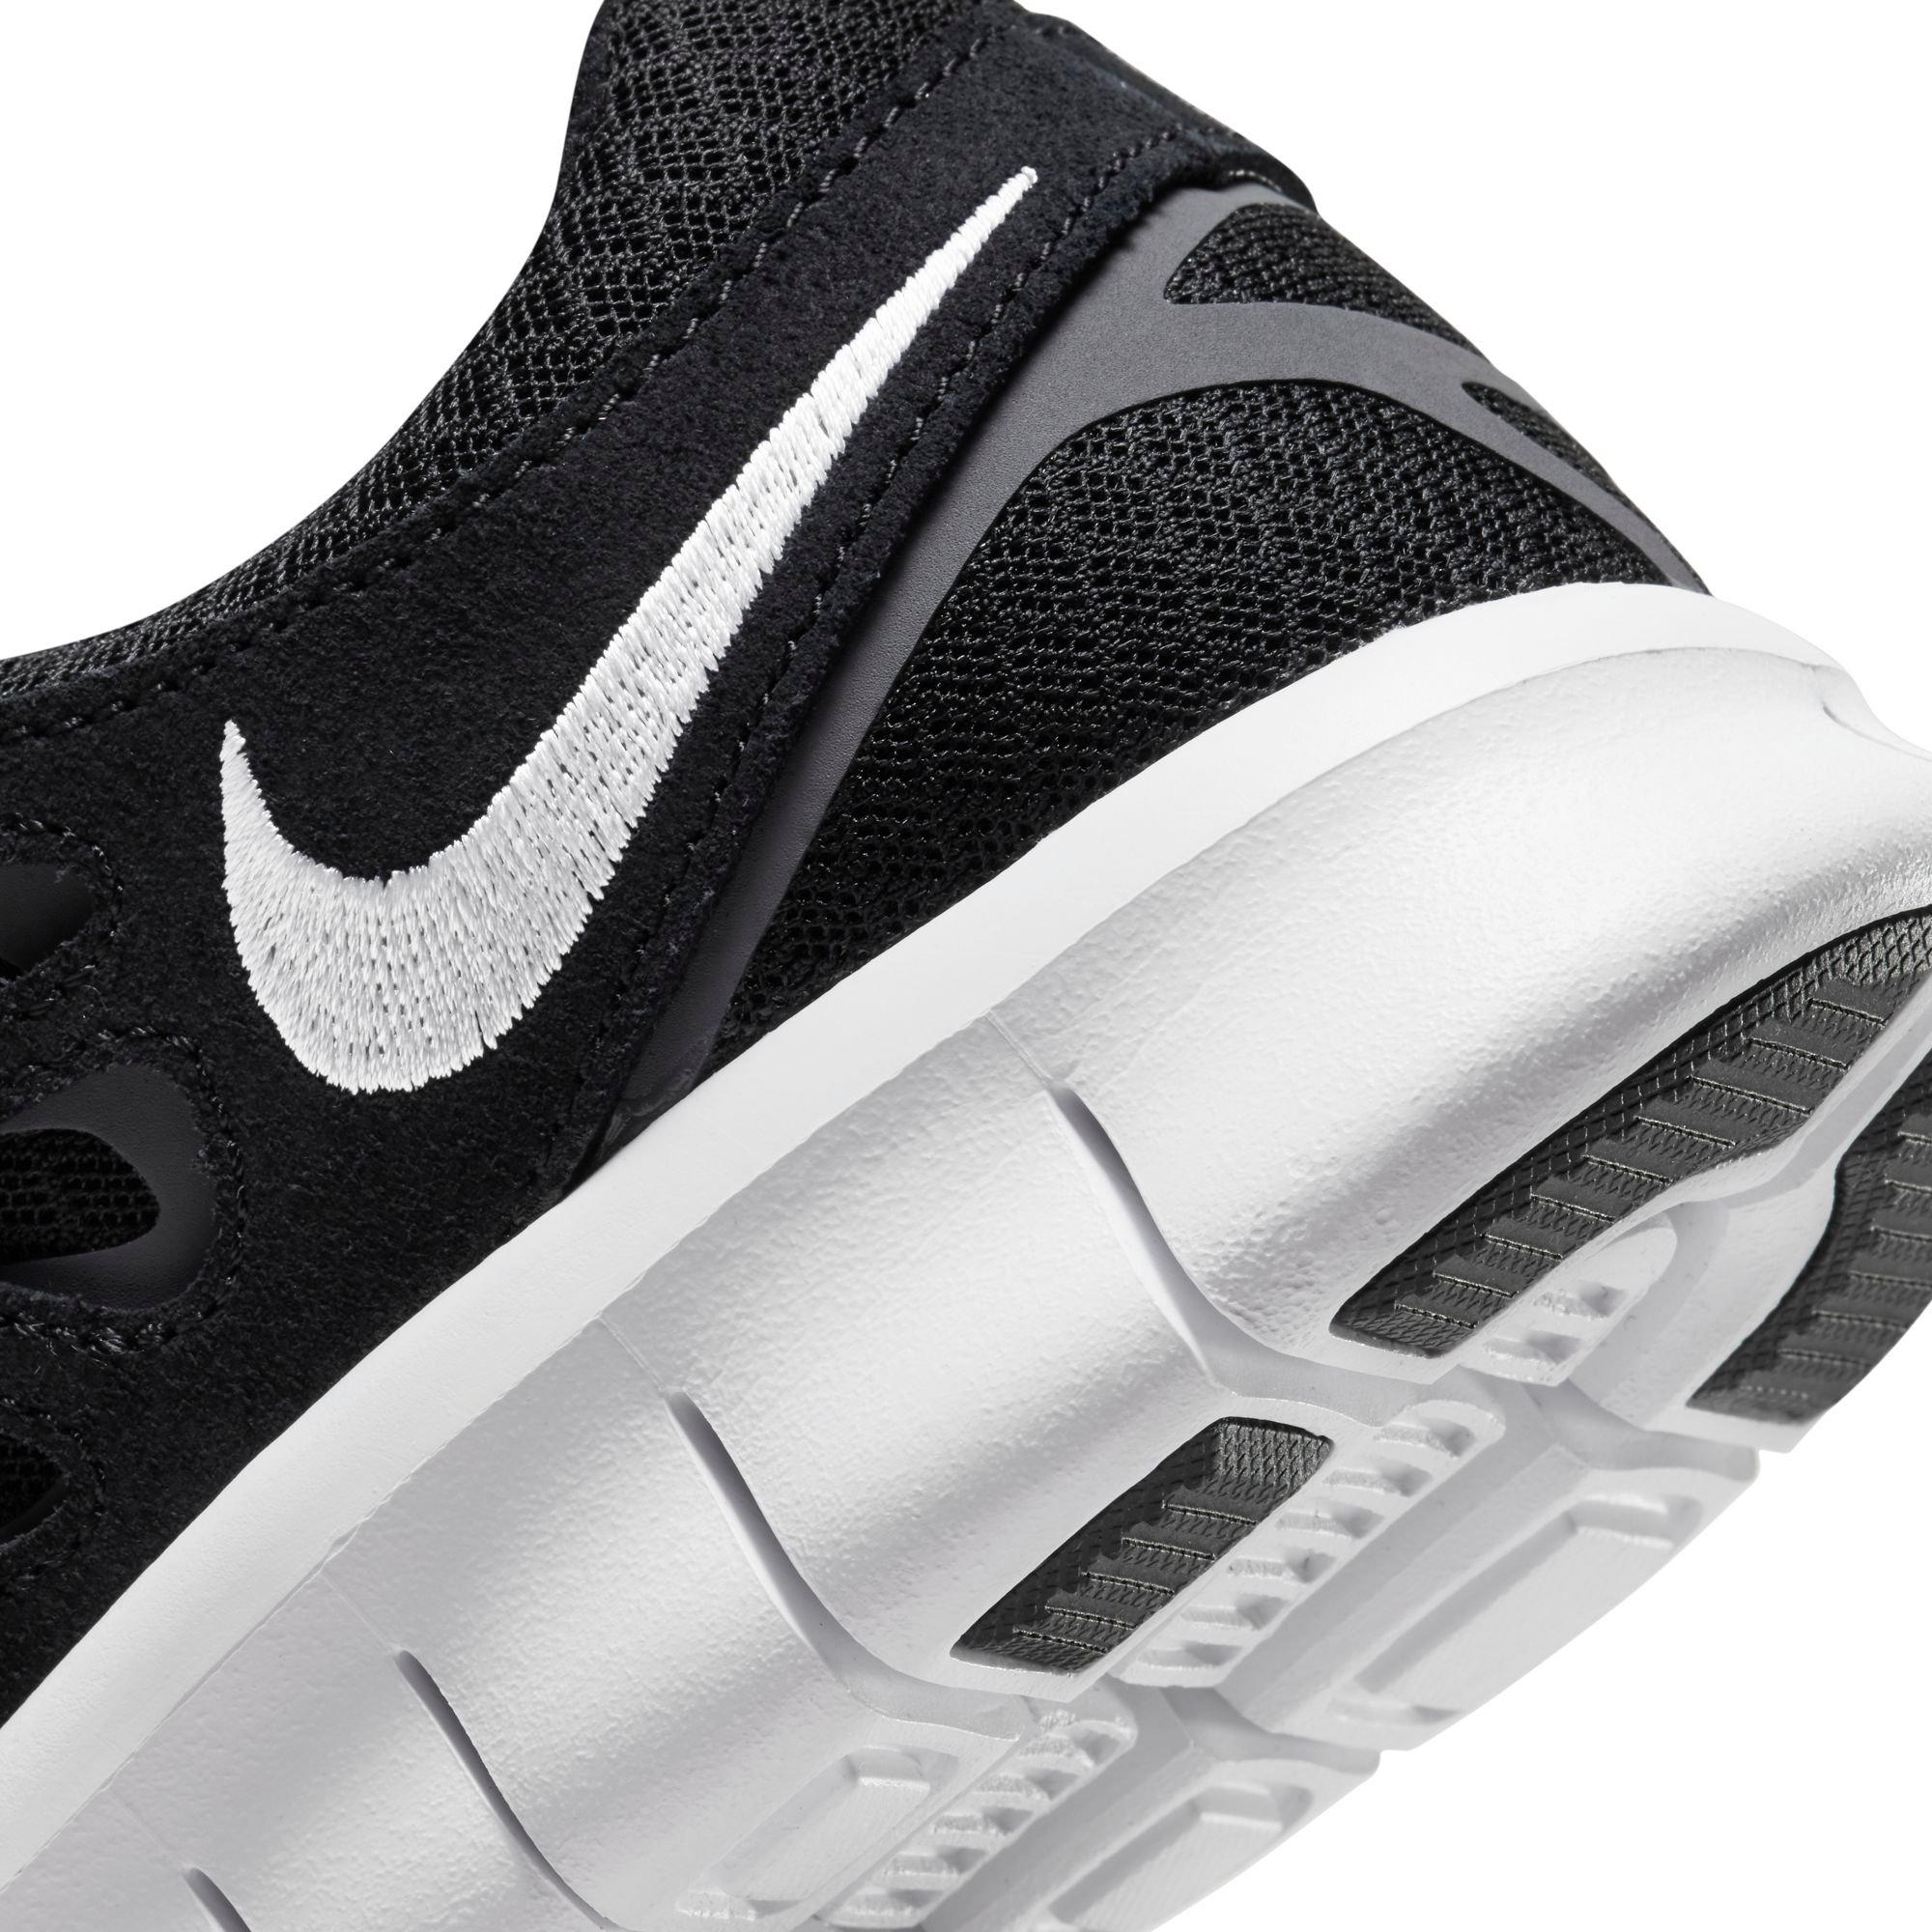 Nike Free Run "Black/White" Running Shoe